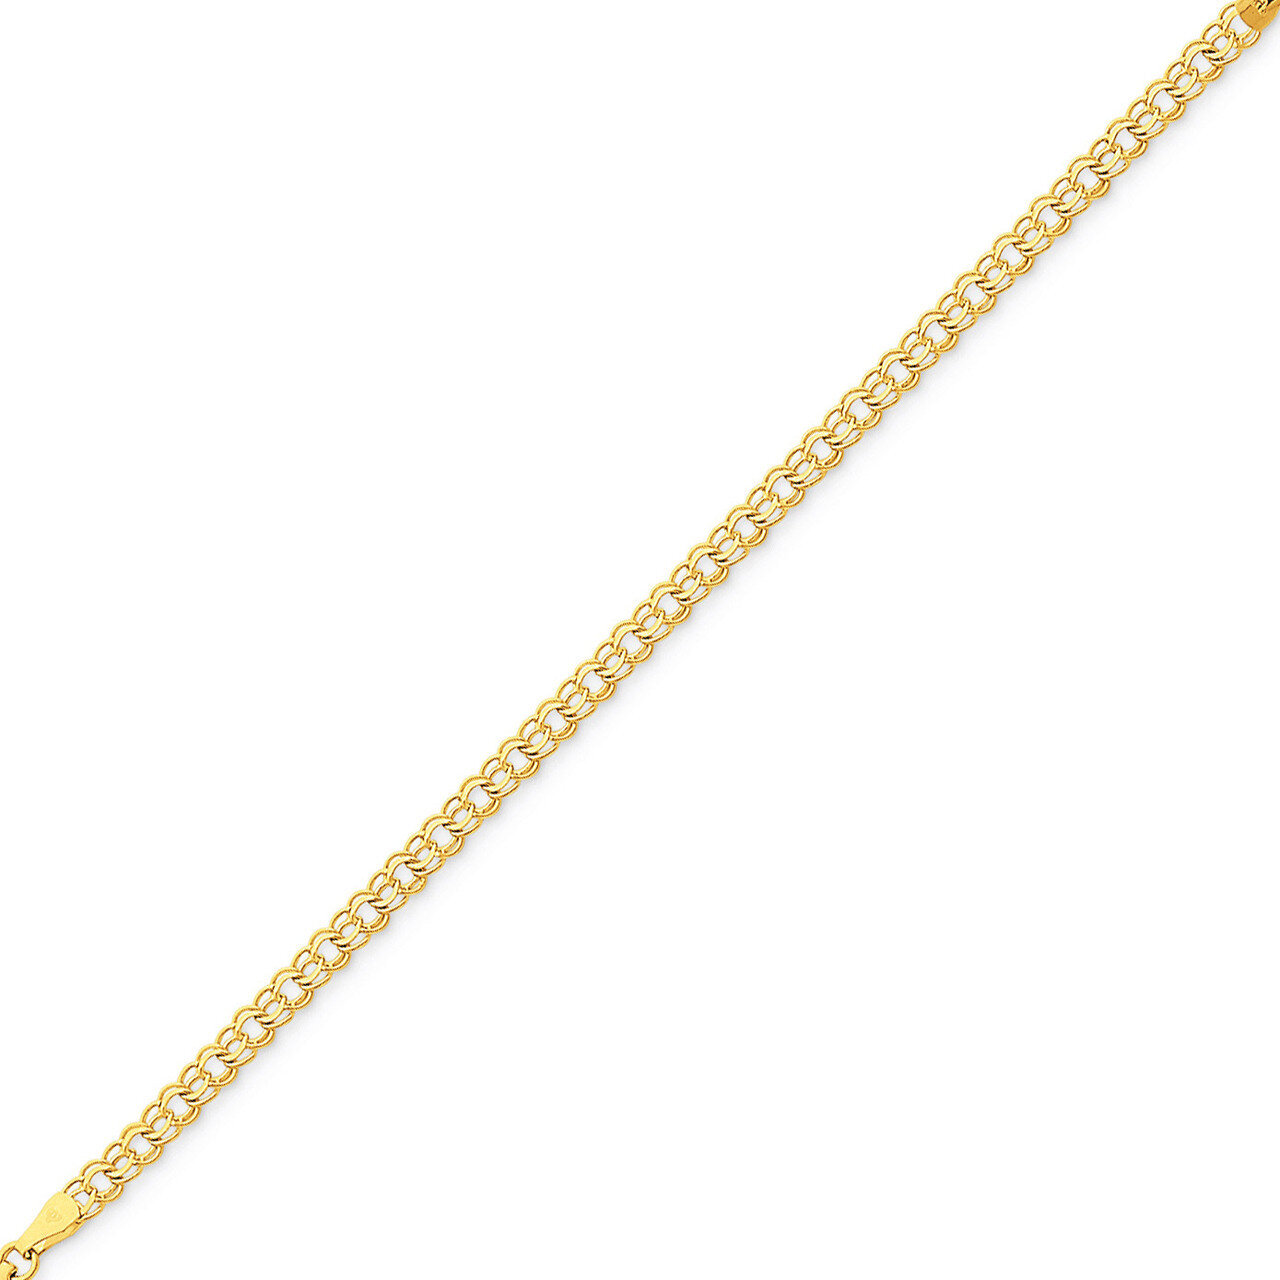 Double Link Charm Bracelet 7 Inch 14k Gold DO506-7